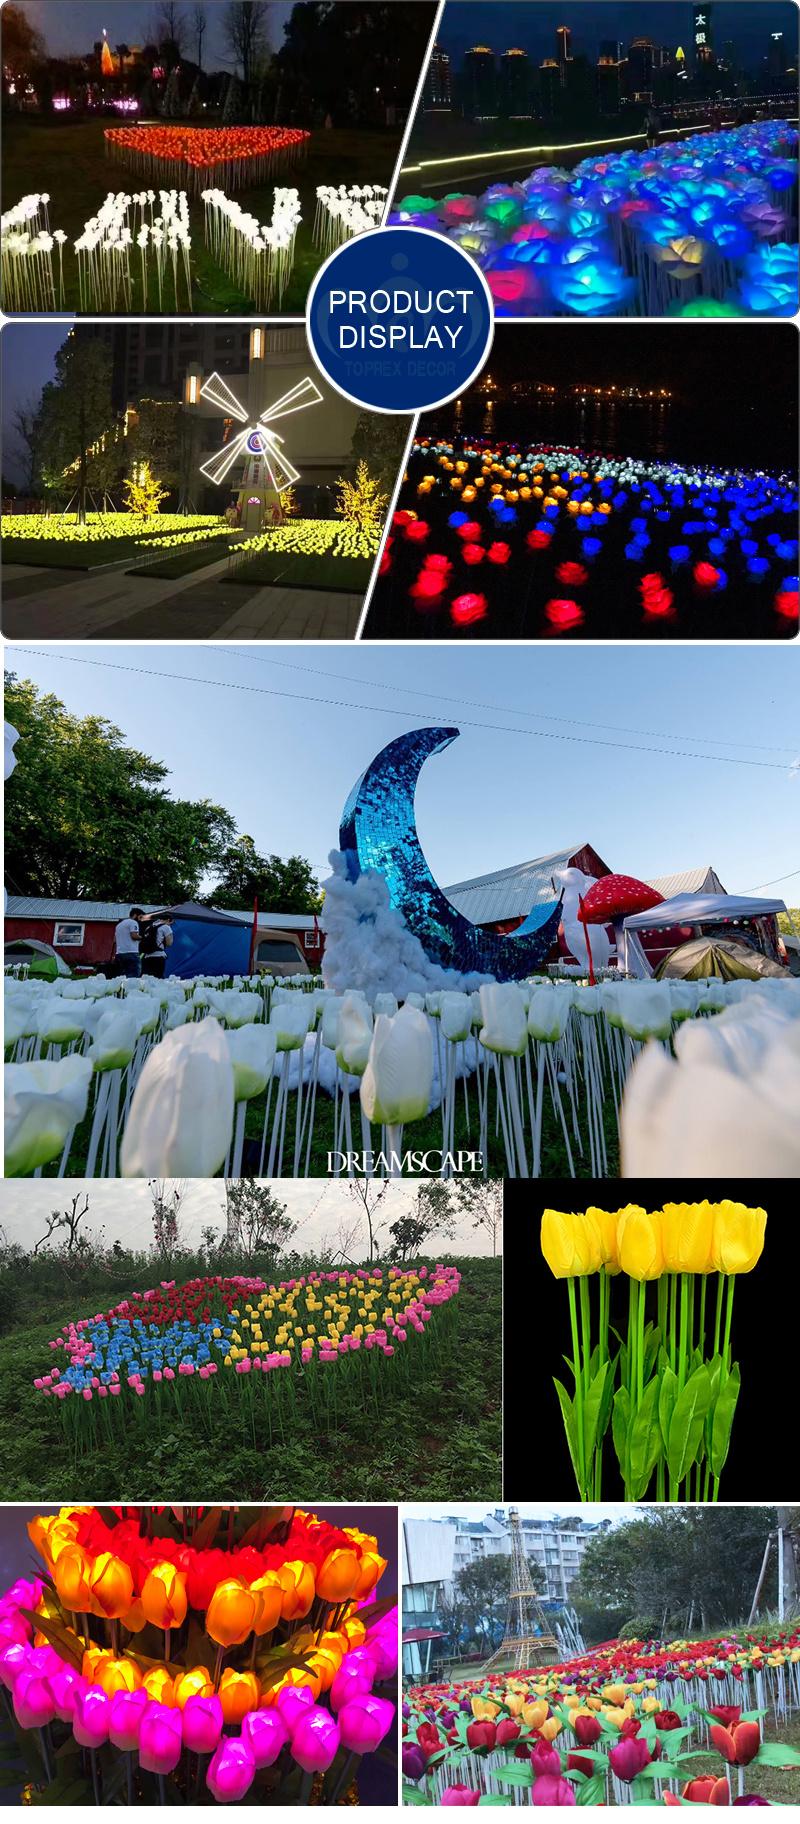 Toprex Decor Promotional Customizable Standing LED Light Flower